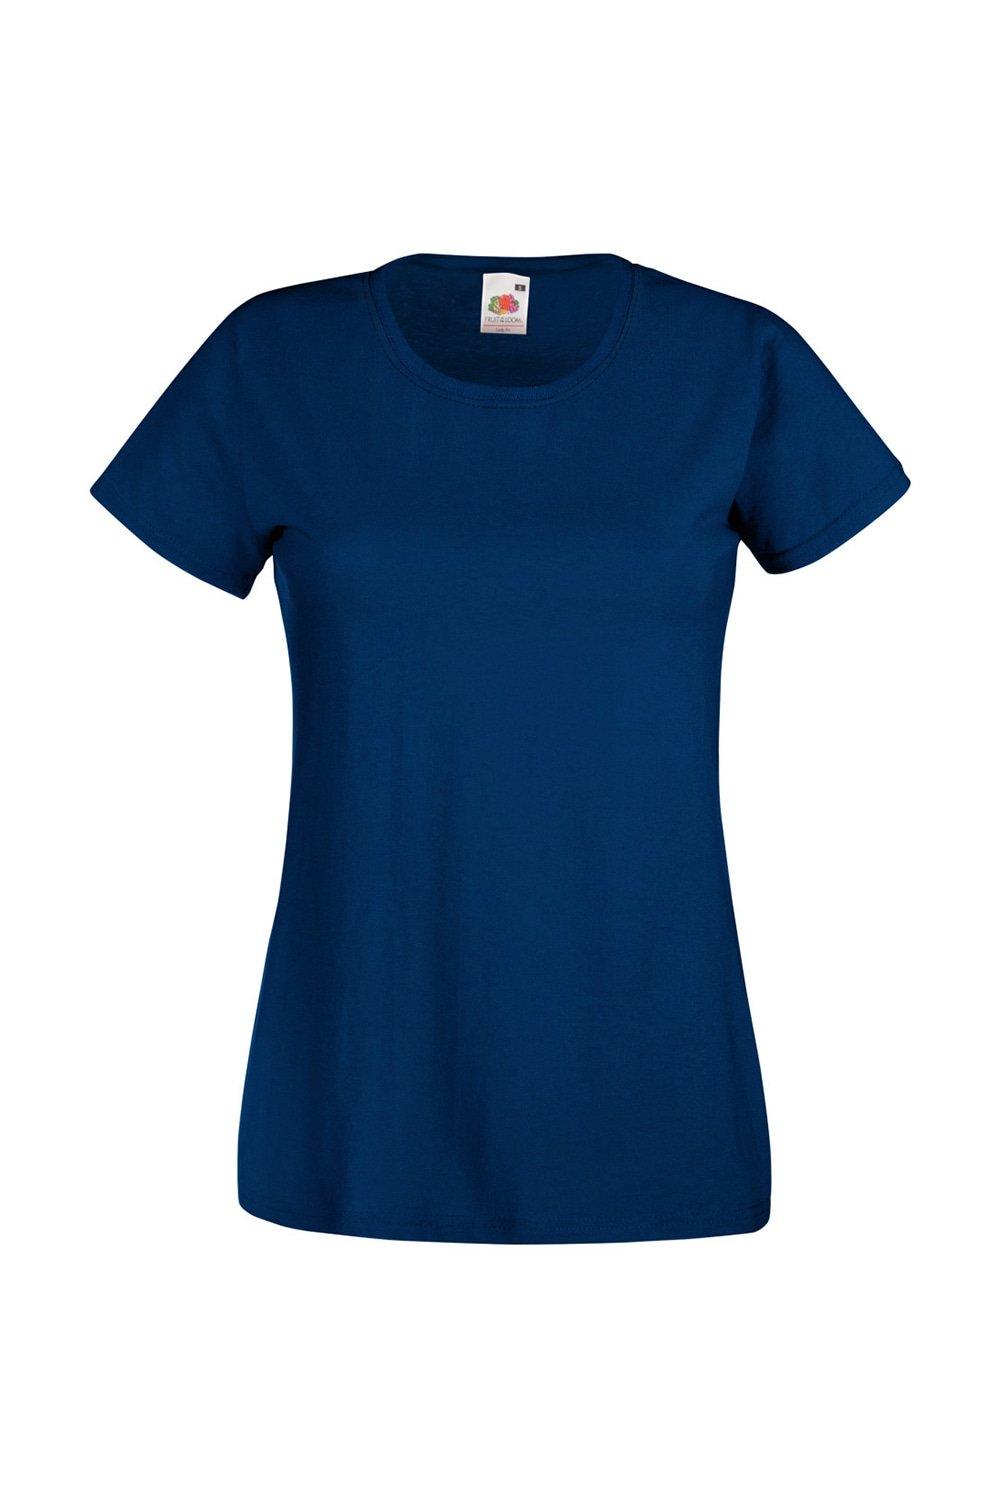 Повседневная футболка с короткими рукавами Value Universal Textiles, синий повседневная футболка value с длинным рукавом universal textiles синий